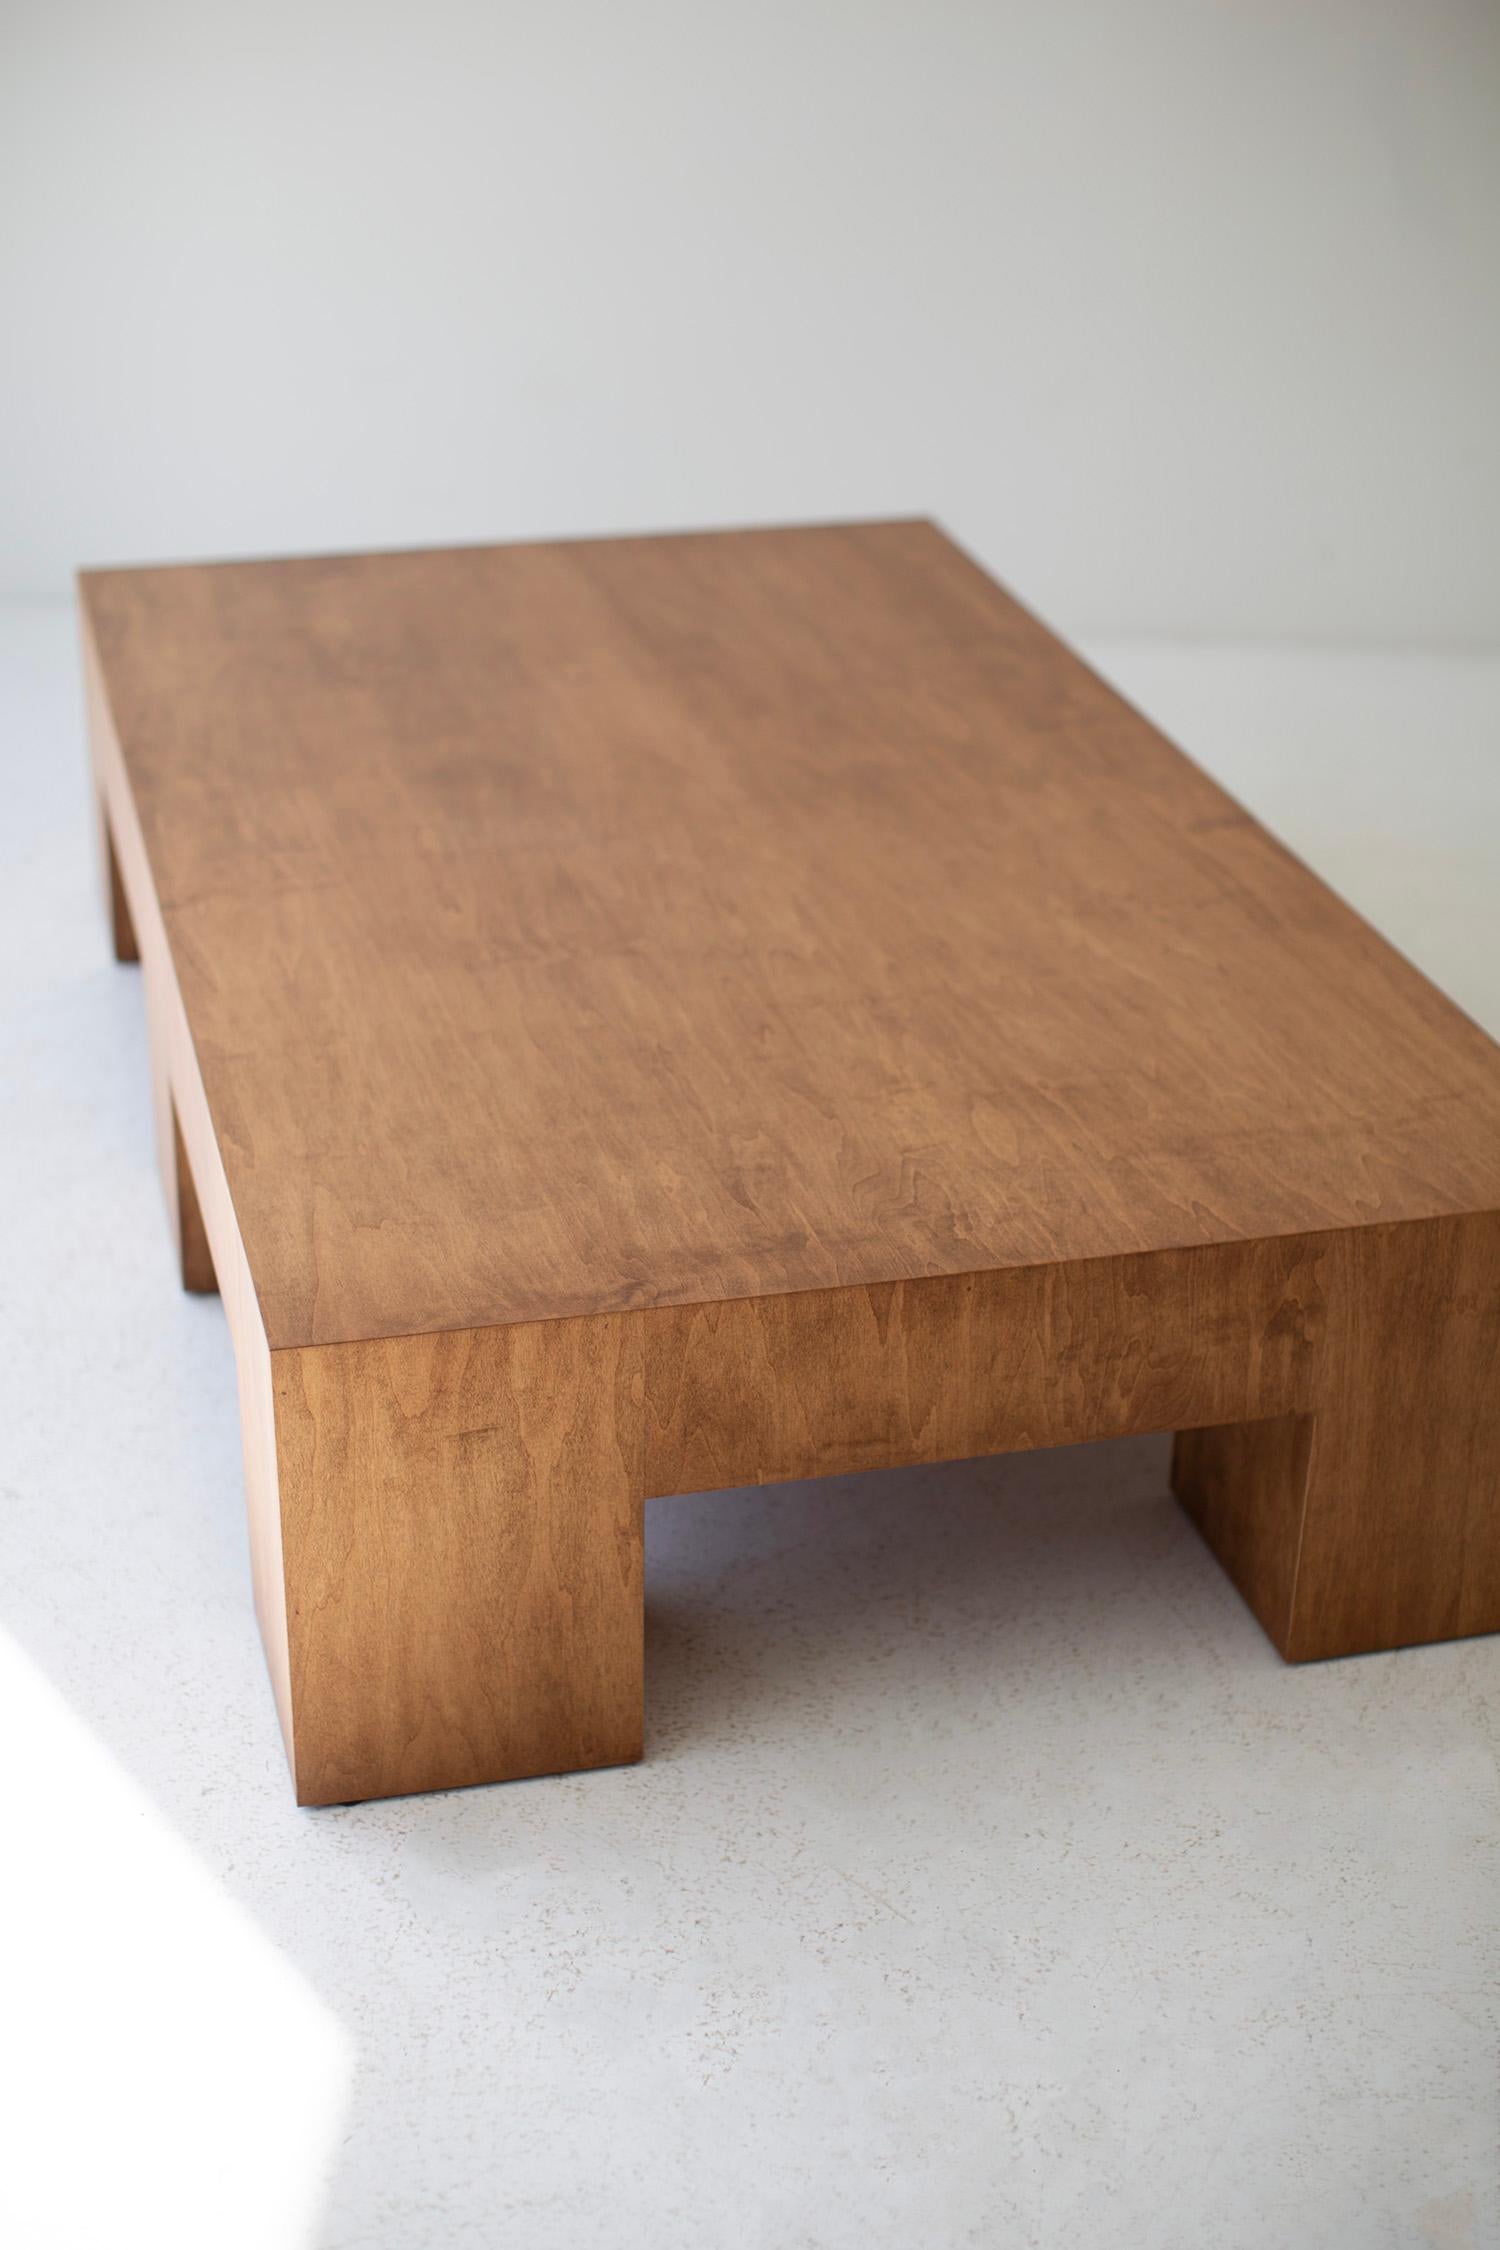 Bertu Coffee Table, Large Modern Coffee Table, Maple Veneer, Mondo In New Condition For Sale In Oak Harbor, OH